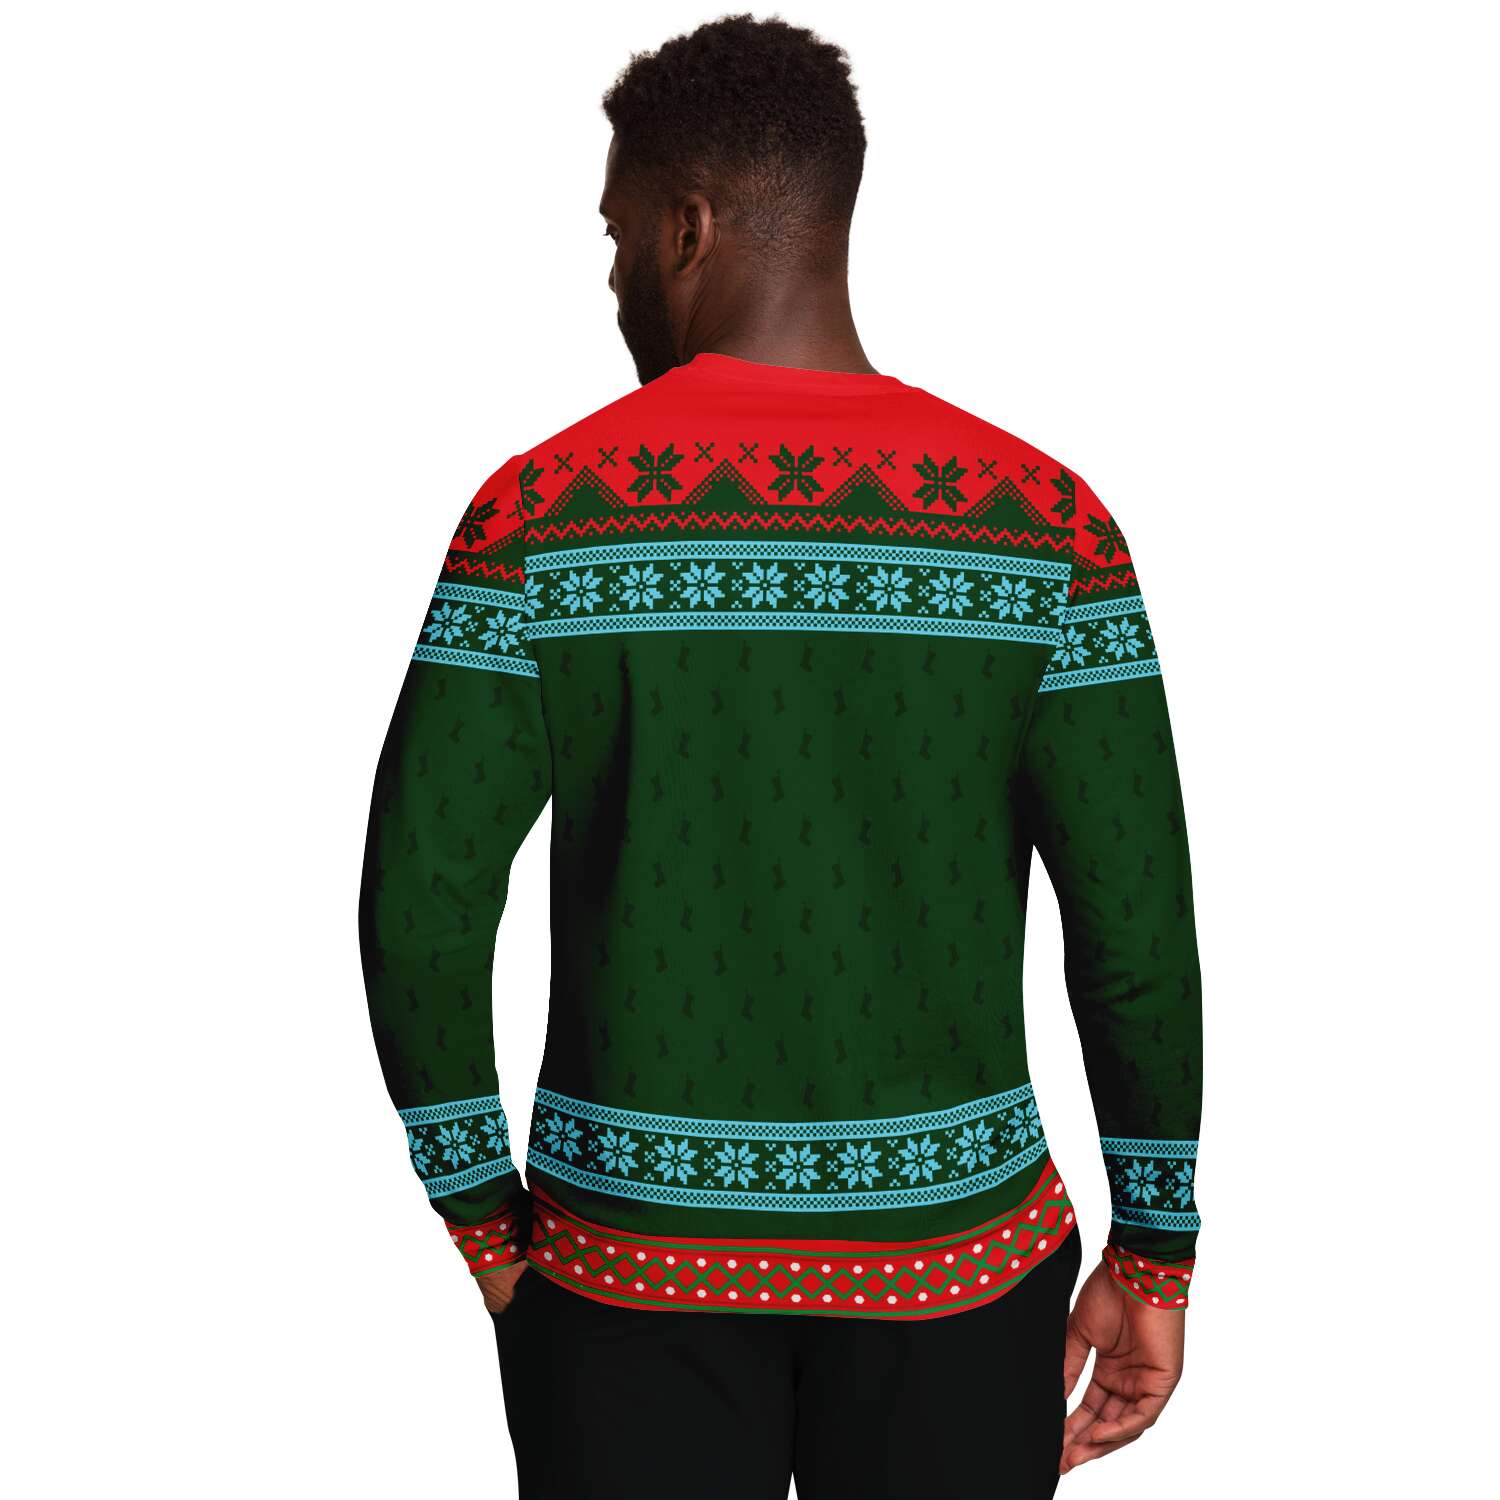 Teachers Always Make The Nice List Sweatshirt | Unisex Ugly Christmas Sweater, Xmas Sweater, Holiday Sweater, Festive Sweater, Funny Sweater, Funny Party Shirt